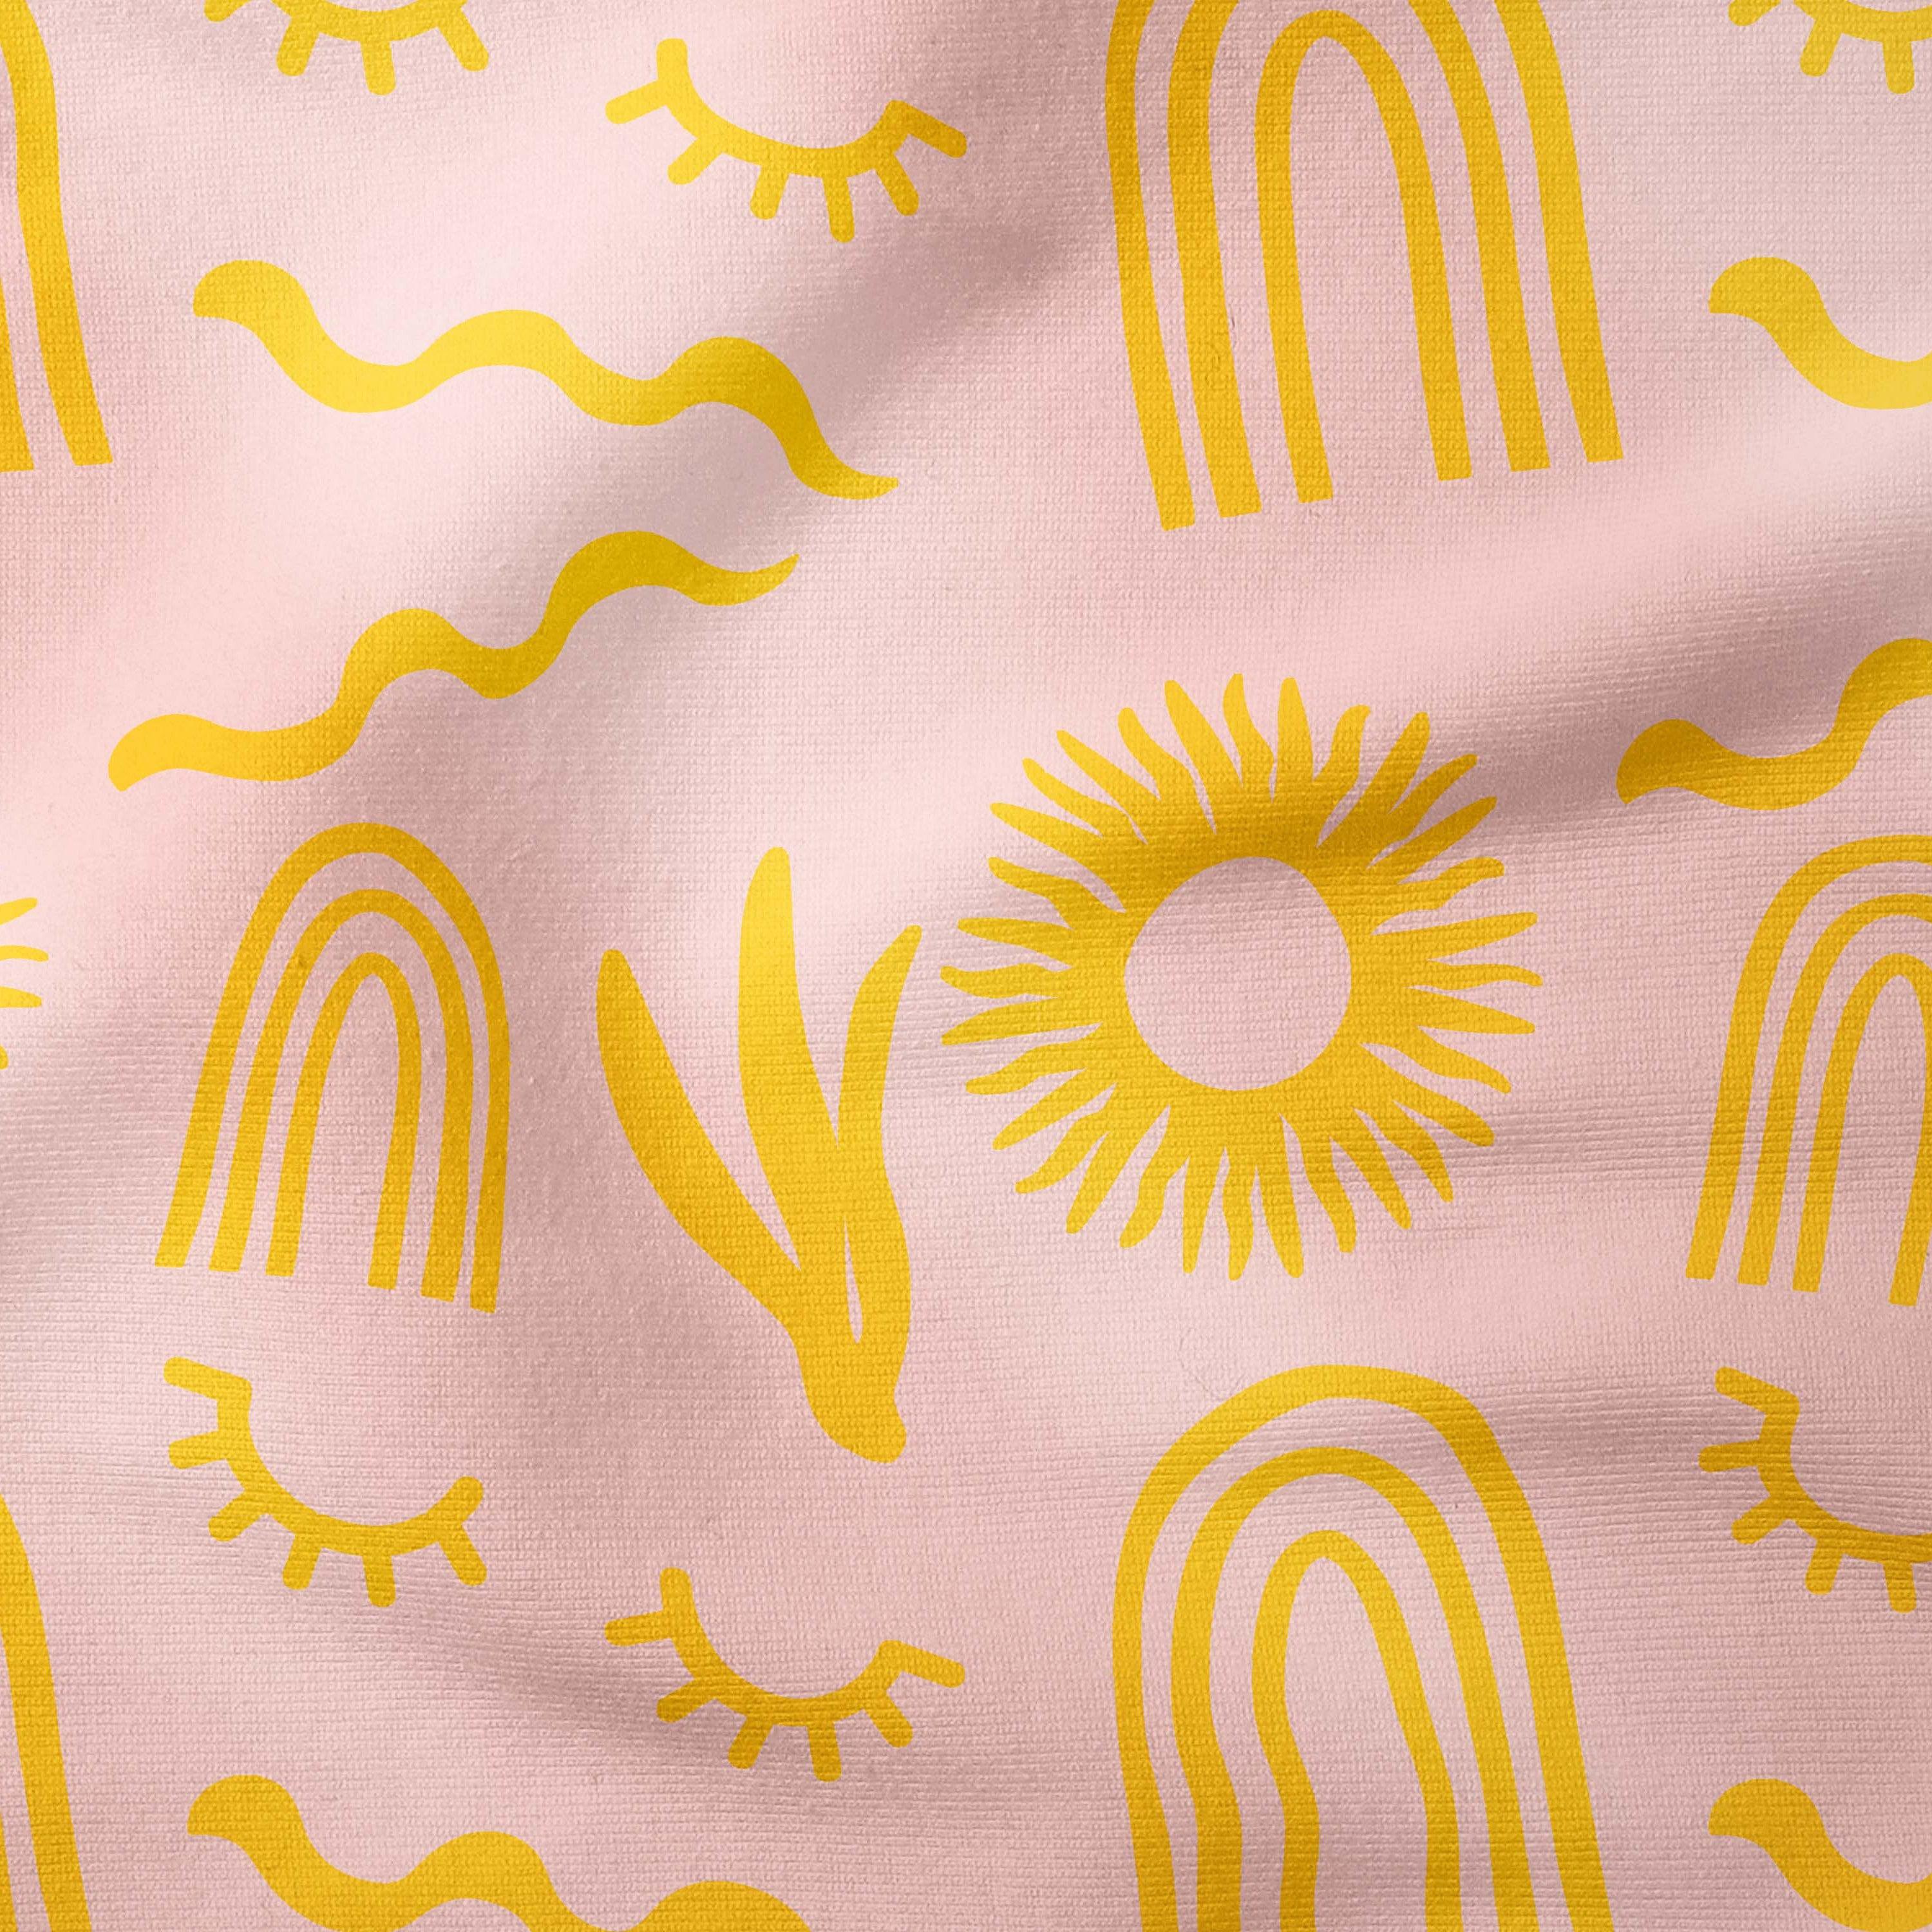 Abstract Shapes-Art Print Fabric-Melco Fabrics-Yellow on Pink-Cotton Poplin (110gsm)-Online-Fabric-Shop-Australia